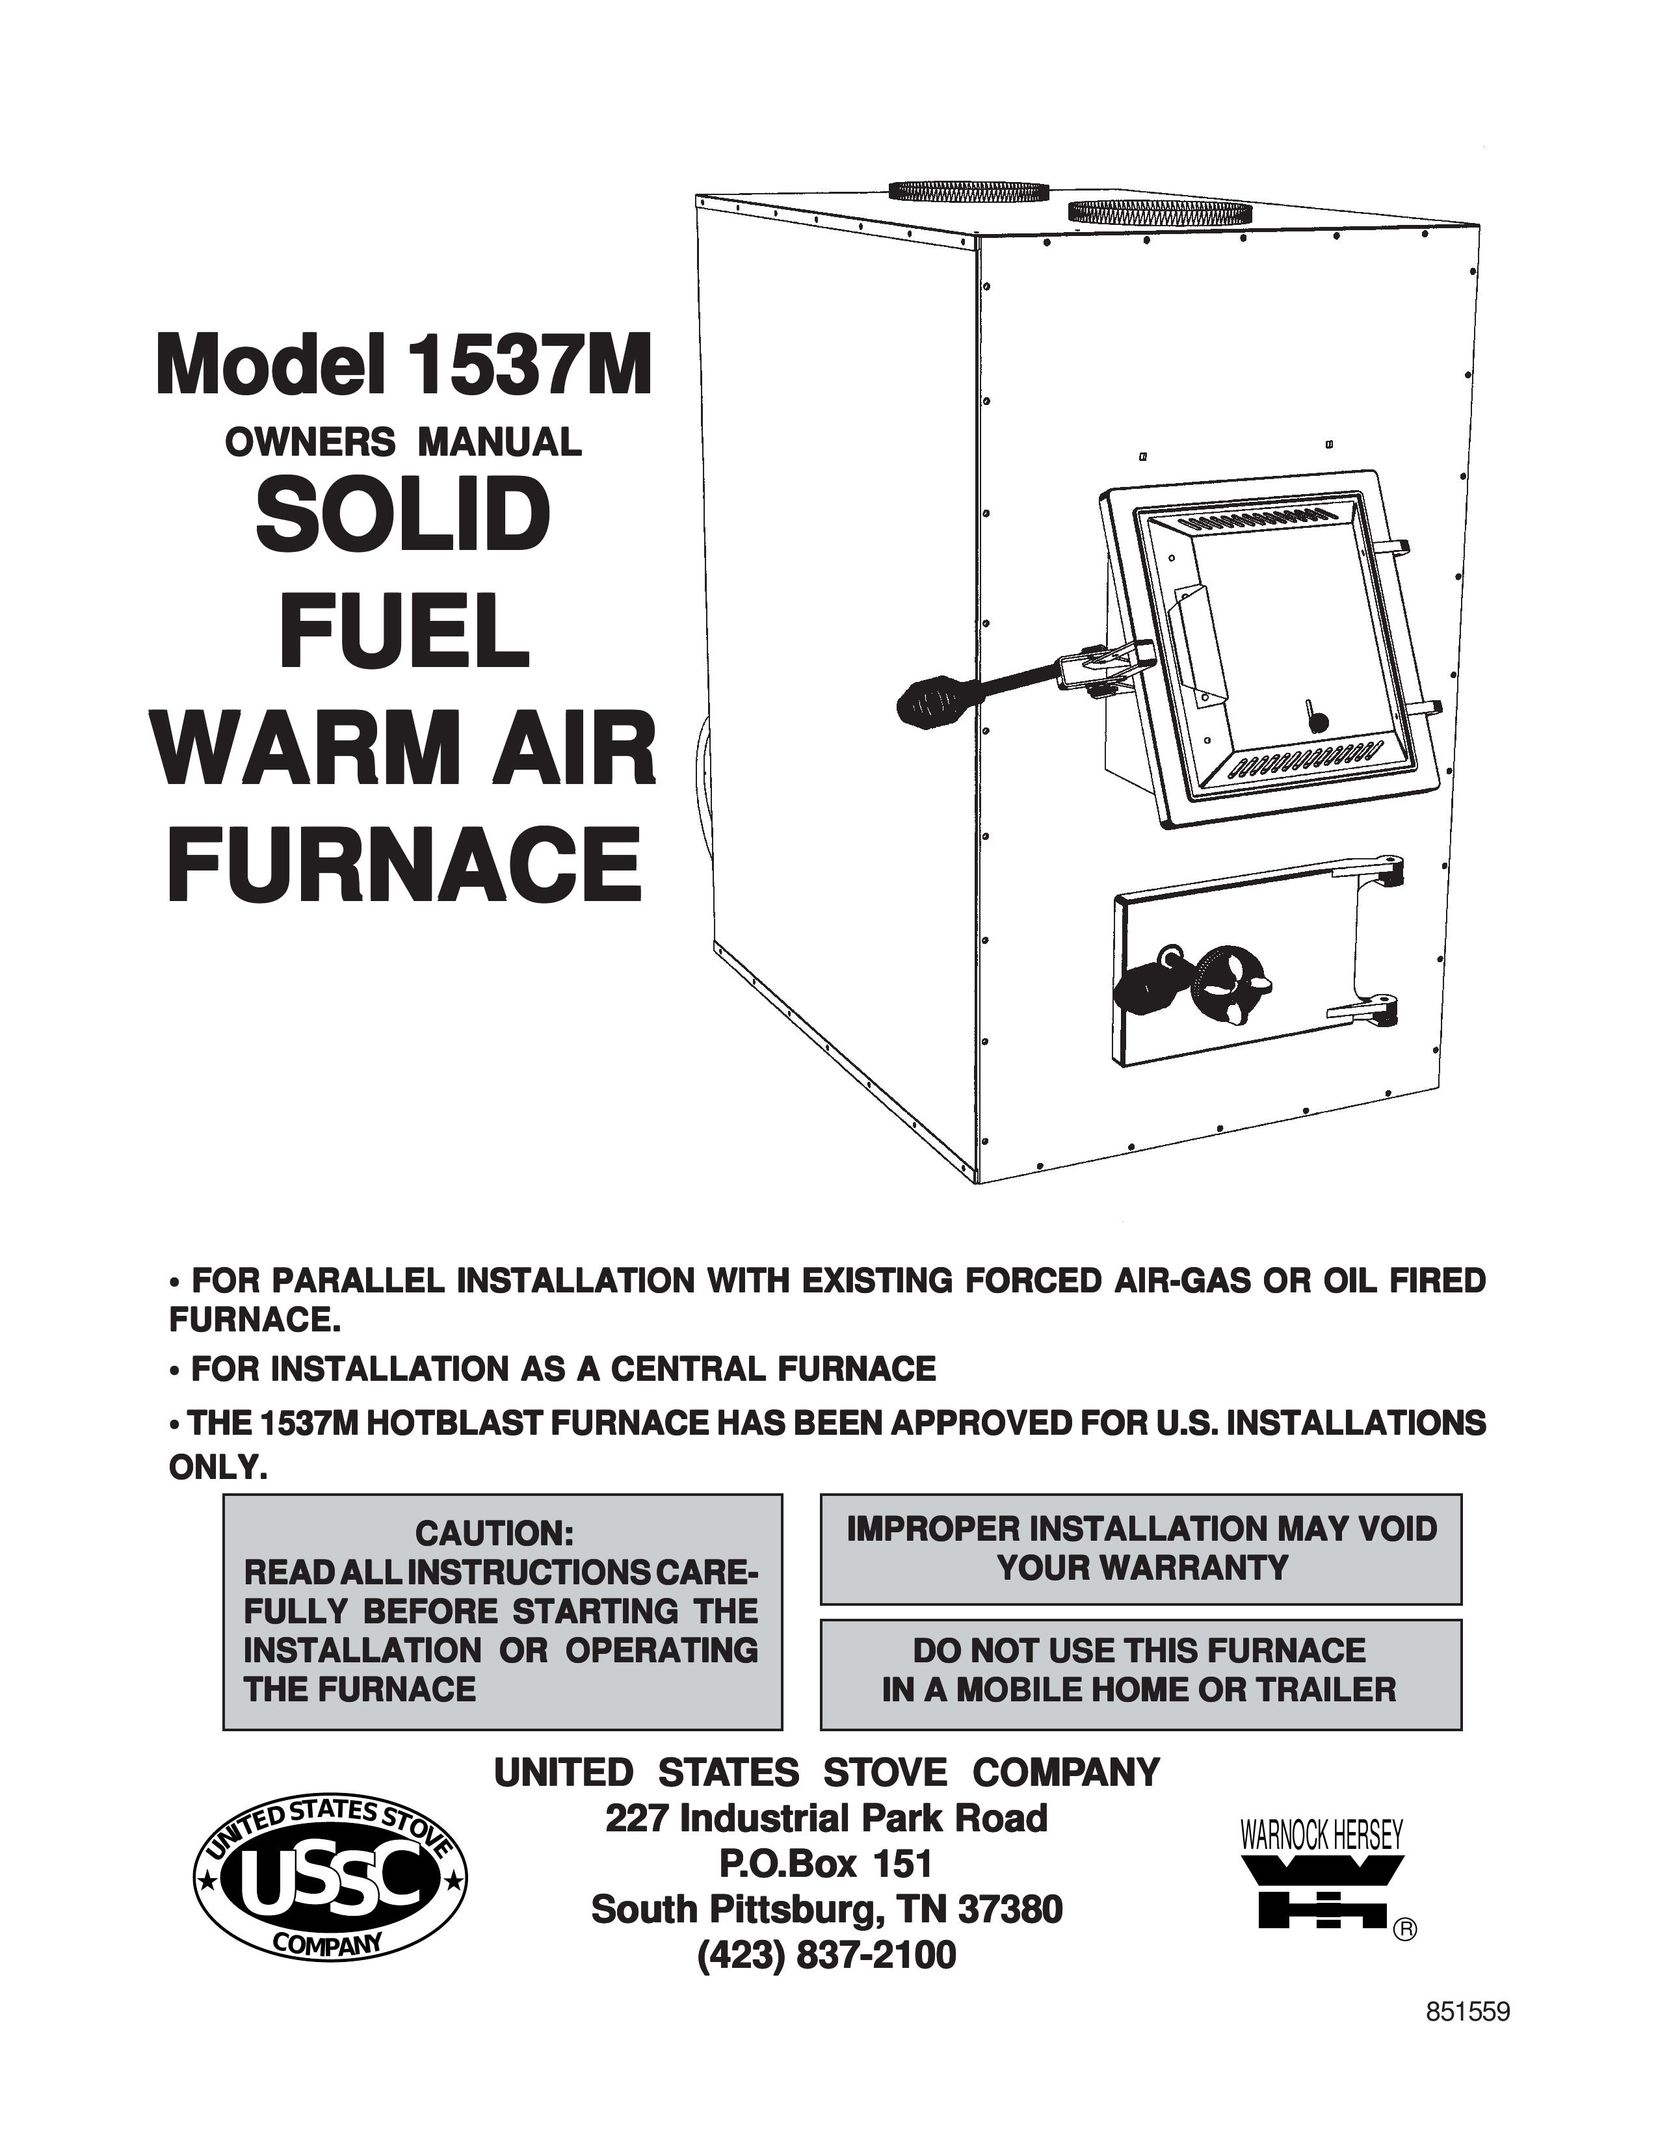 United States Stove 1537M Furnace User Manual